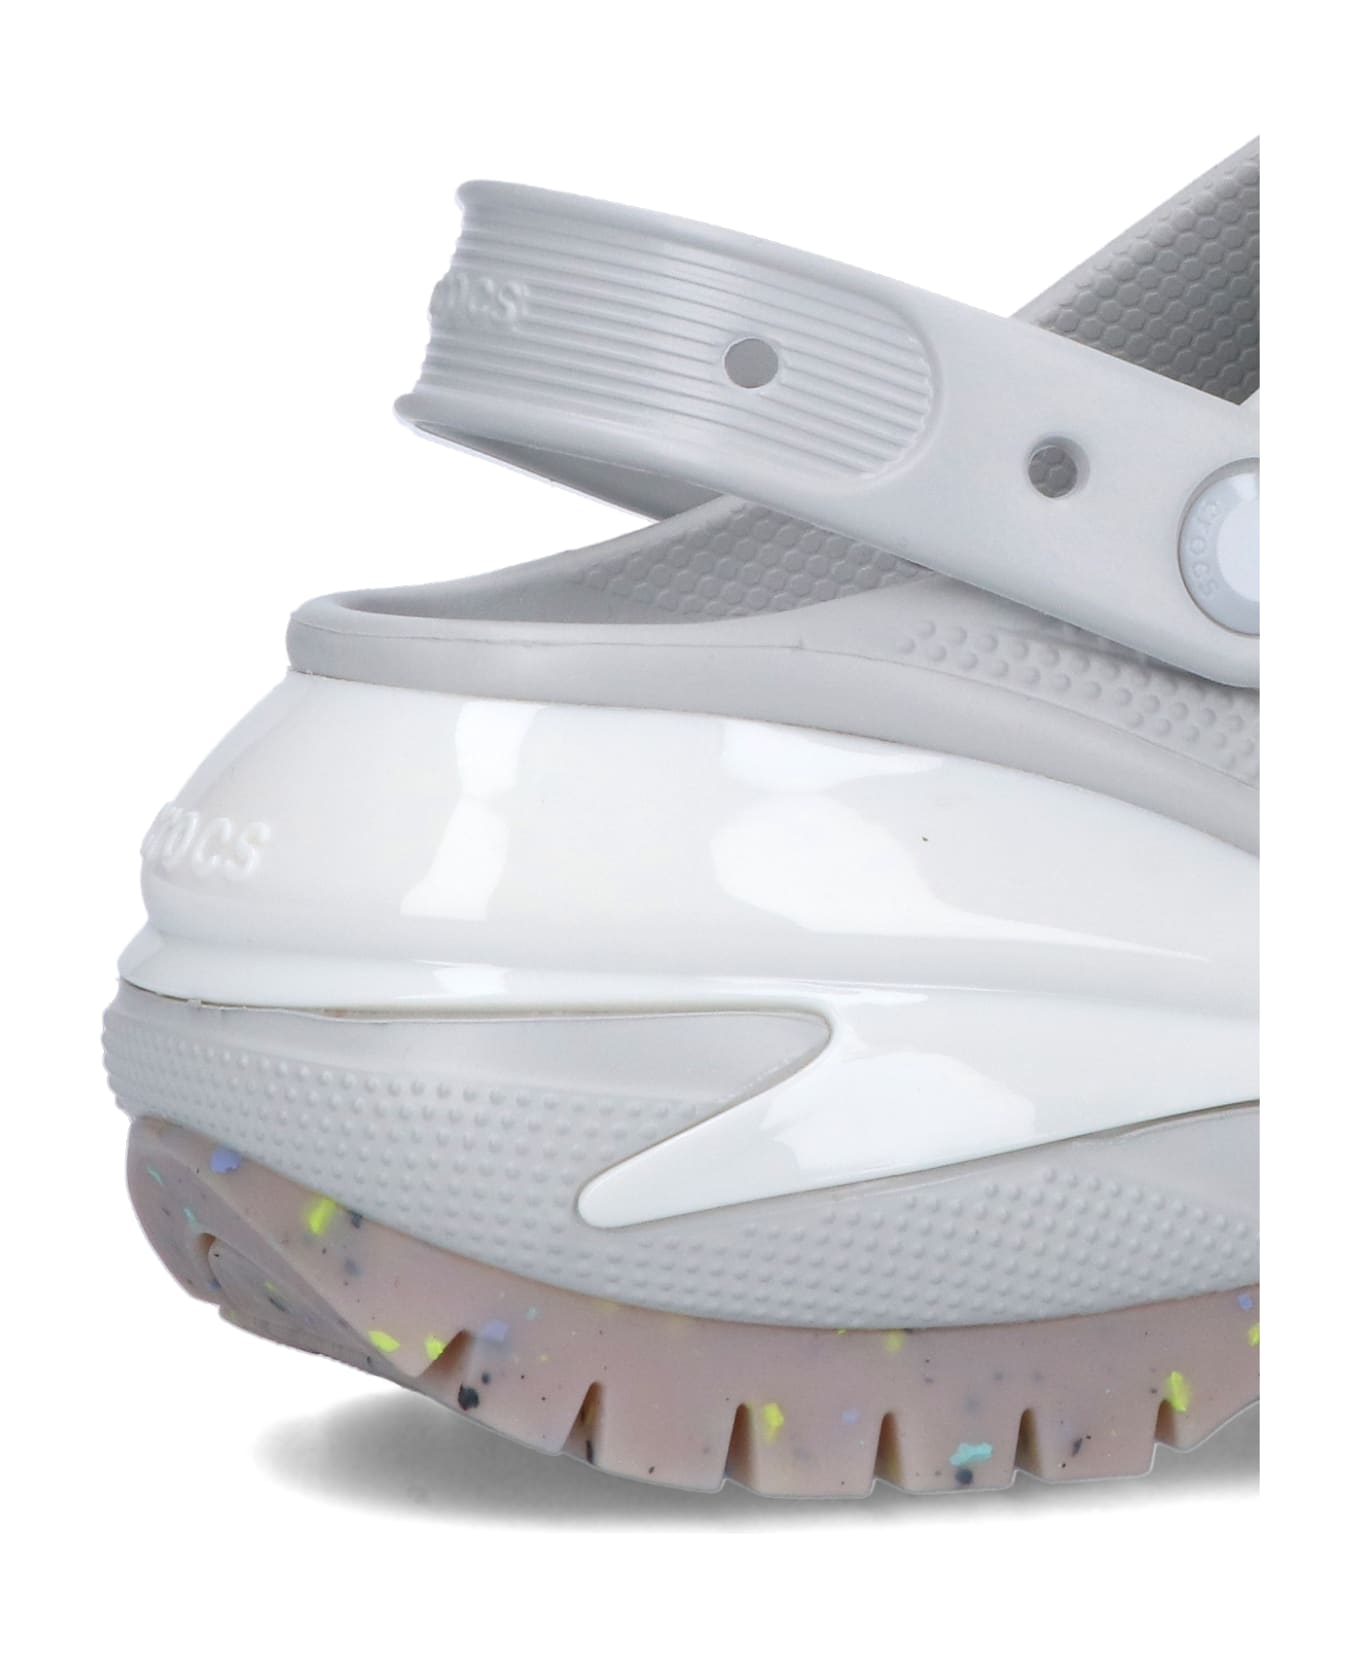 Crocs Flat Shoes - Grey